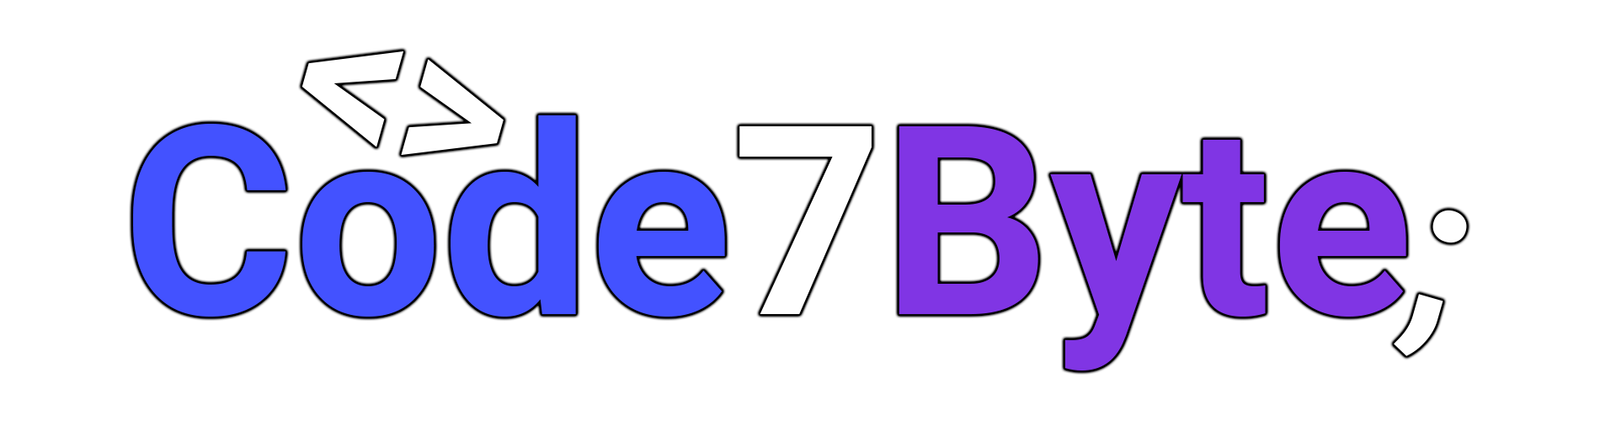 Code7Byte